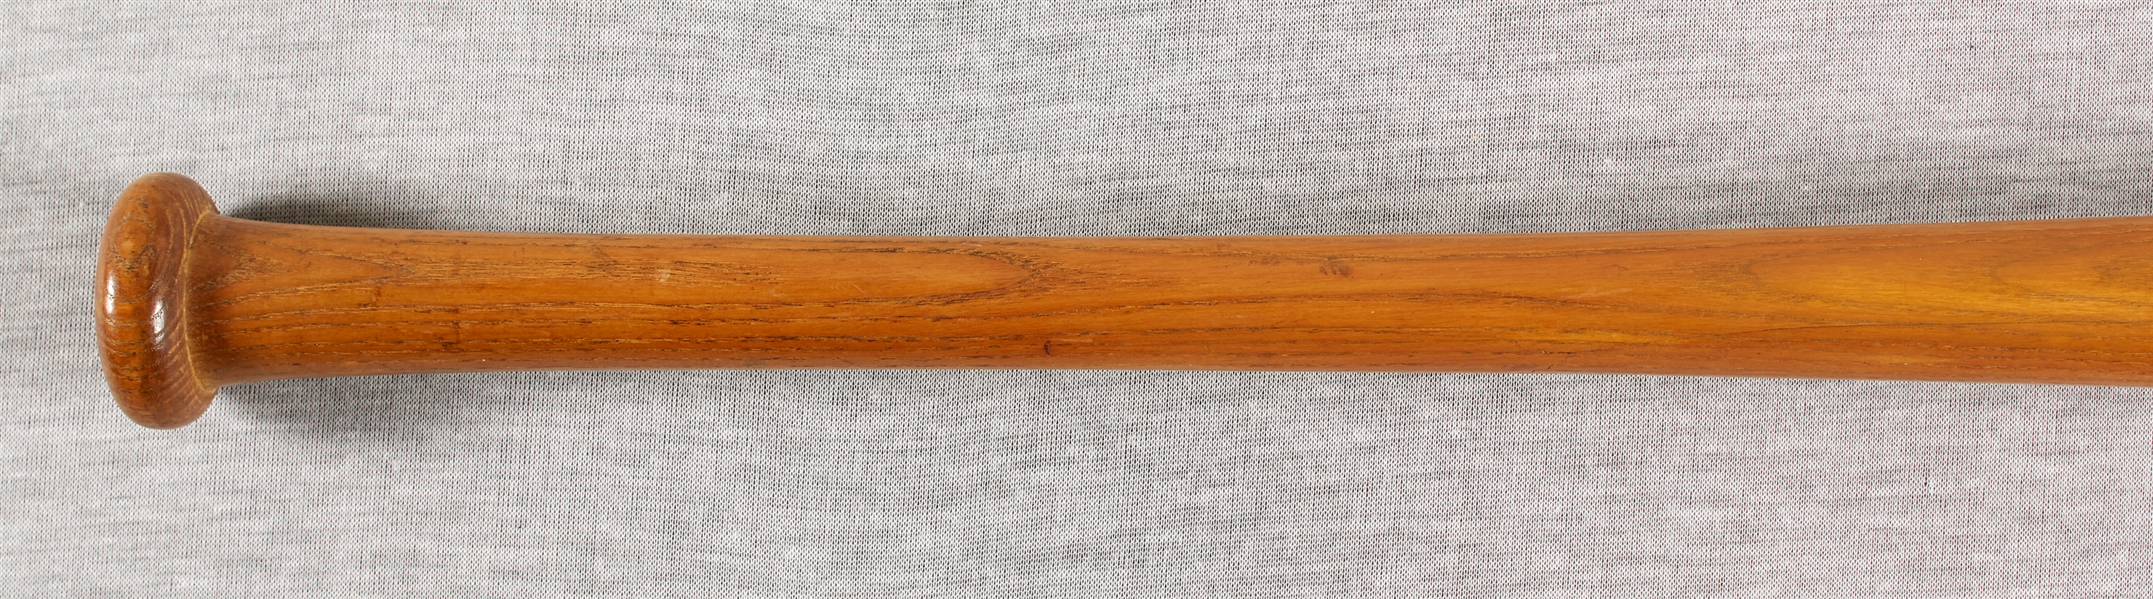 Bobby Avilla 1950s Game-Used Louisville Slugger Bat (Graded PSA/DNA GU 7.5)